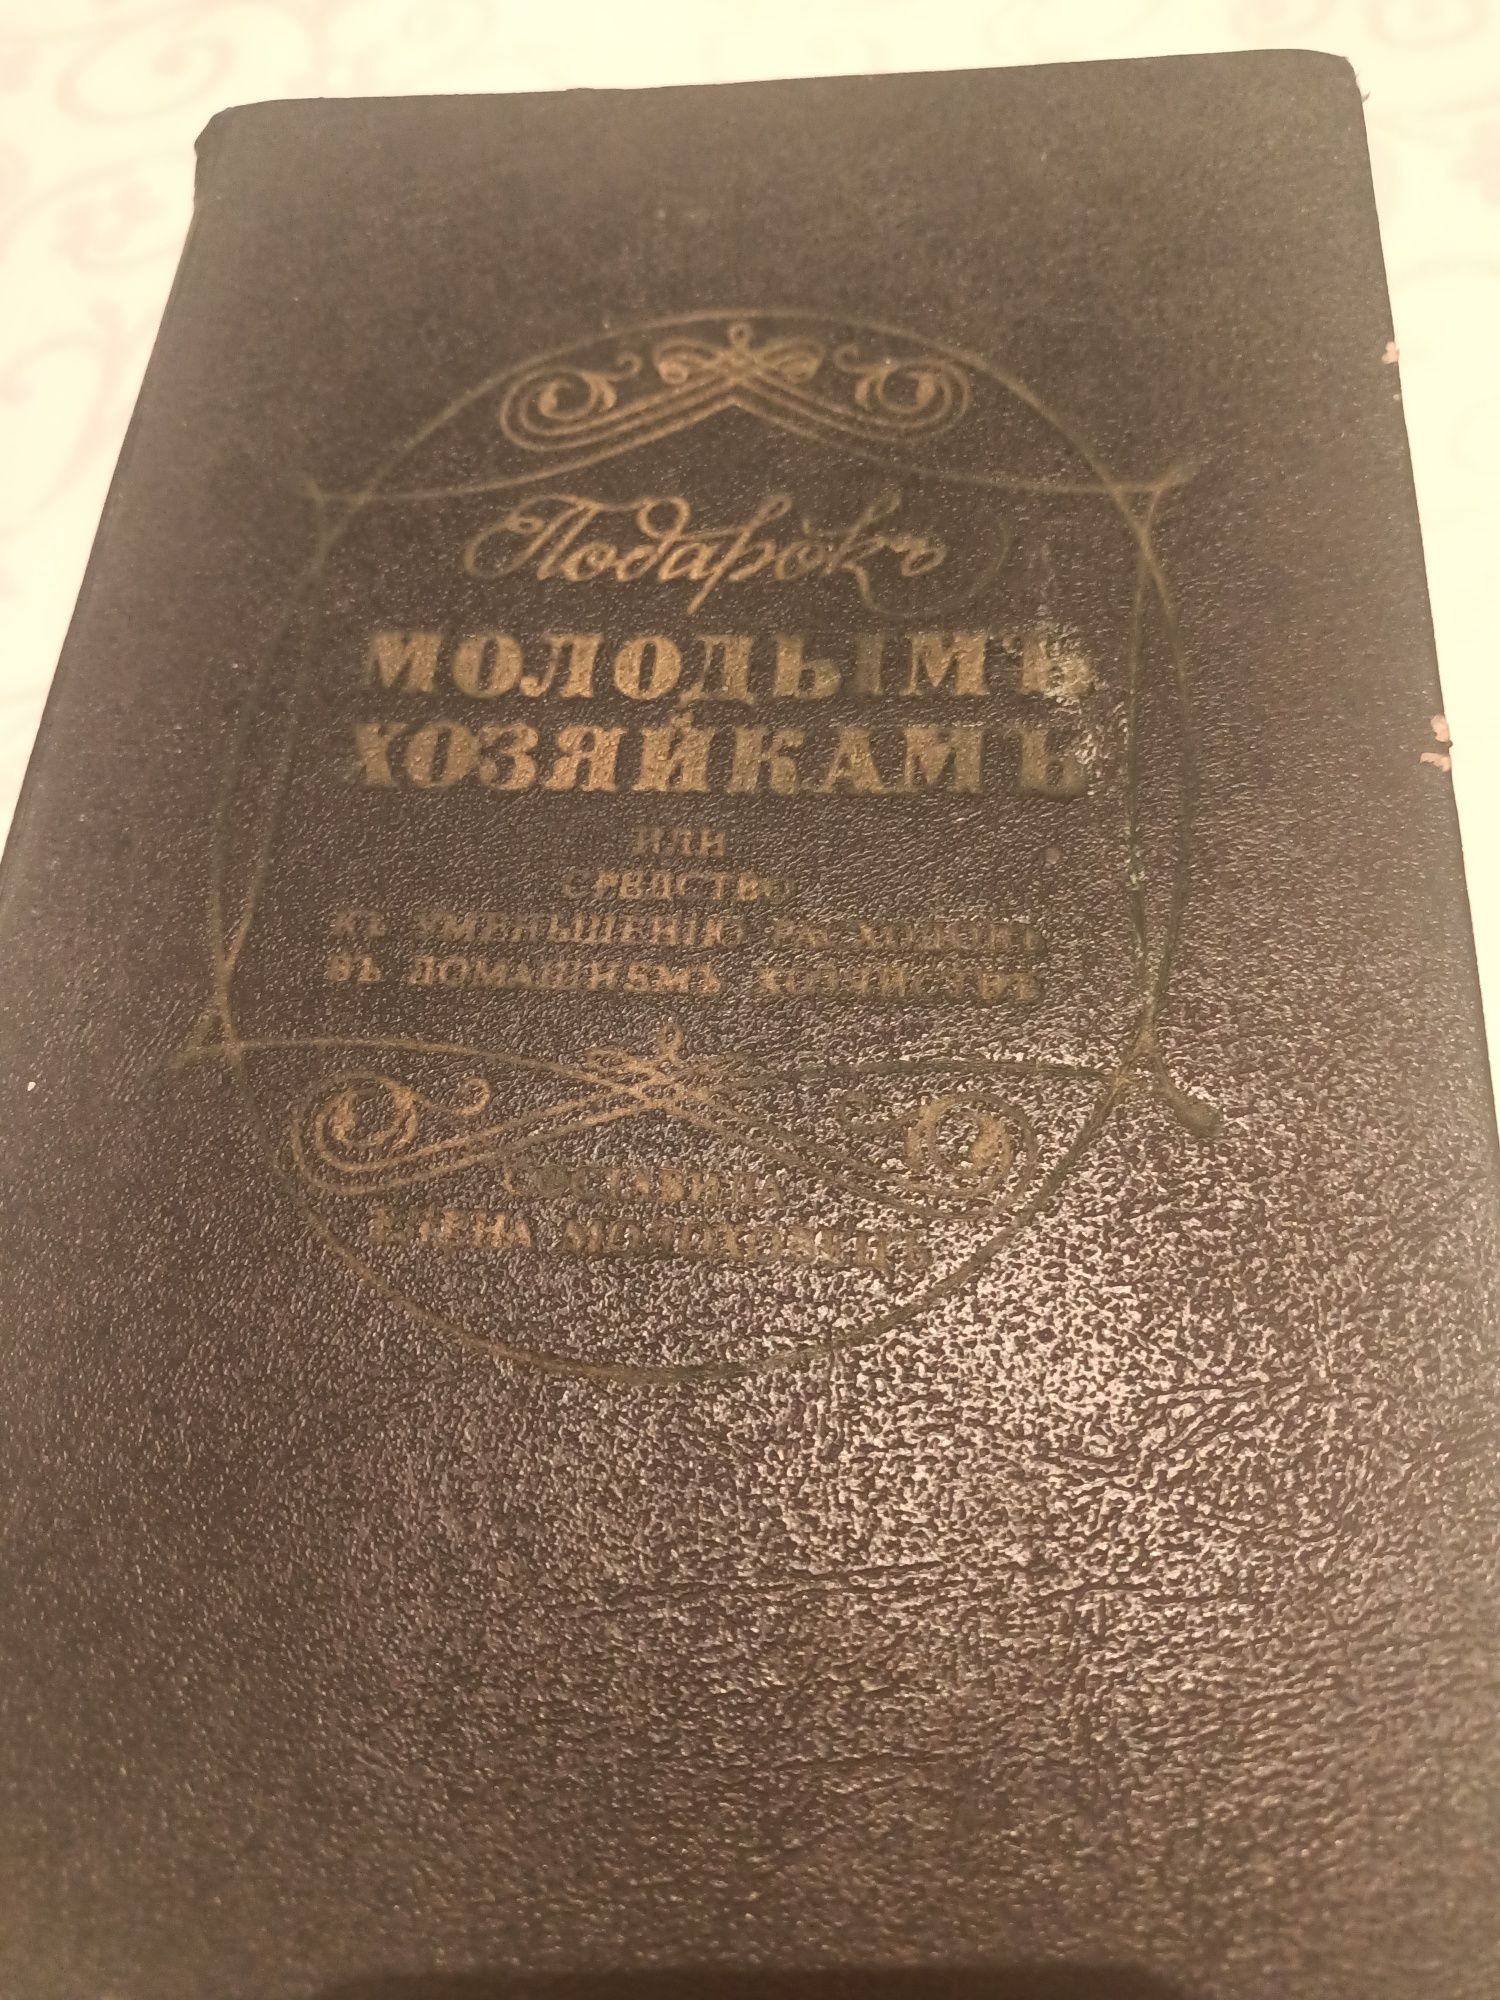 Продам антикварную книгу  Подарокъ молодымъ хозяйкамъ 1901 года